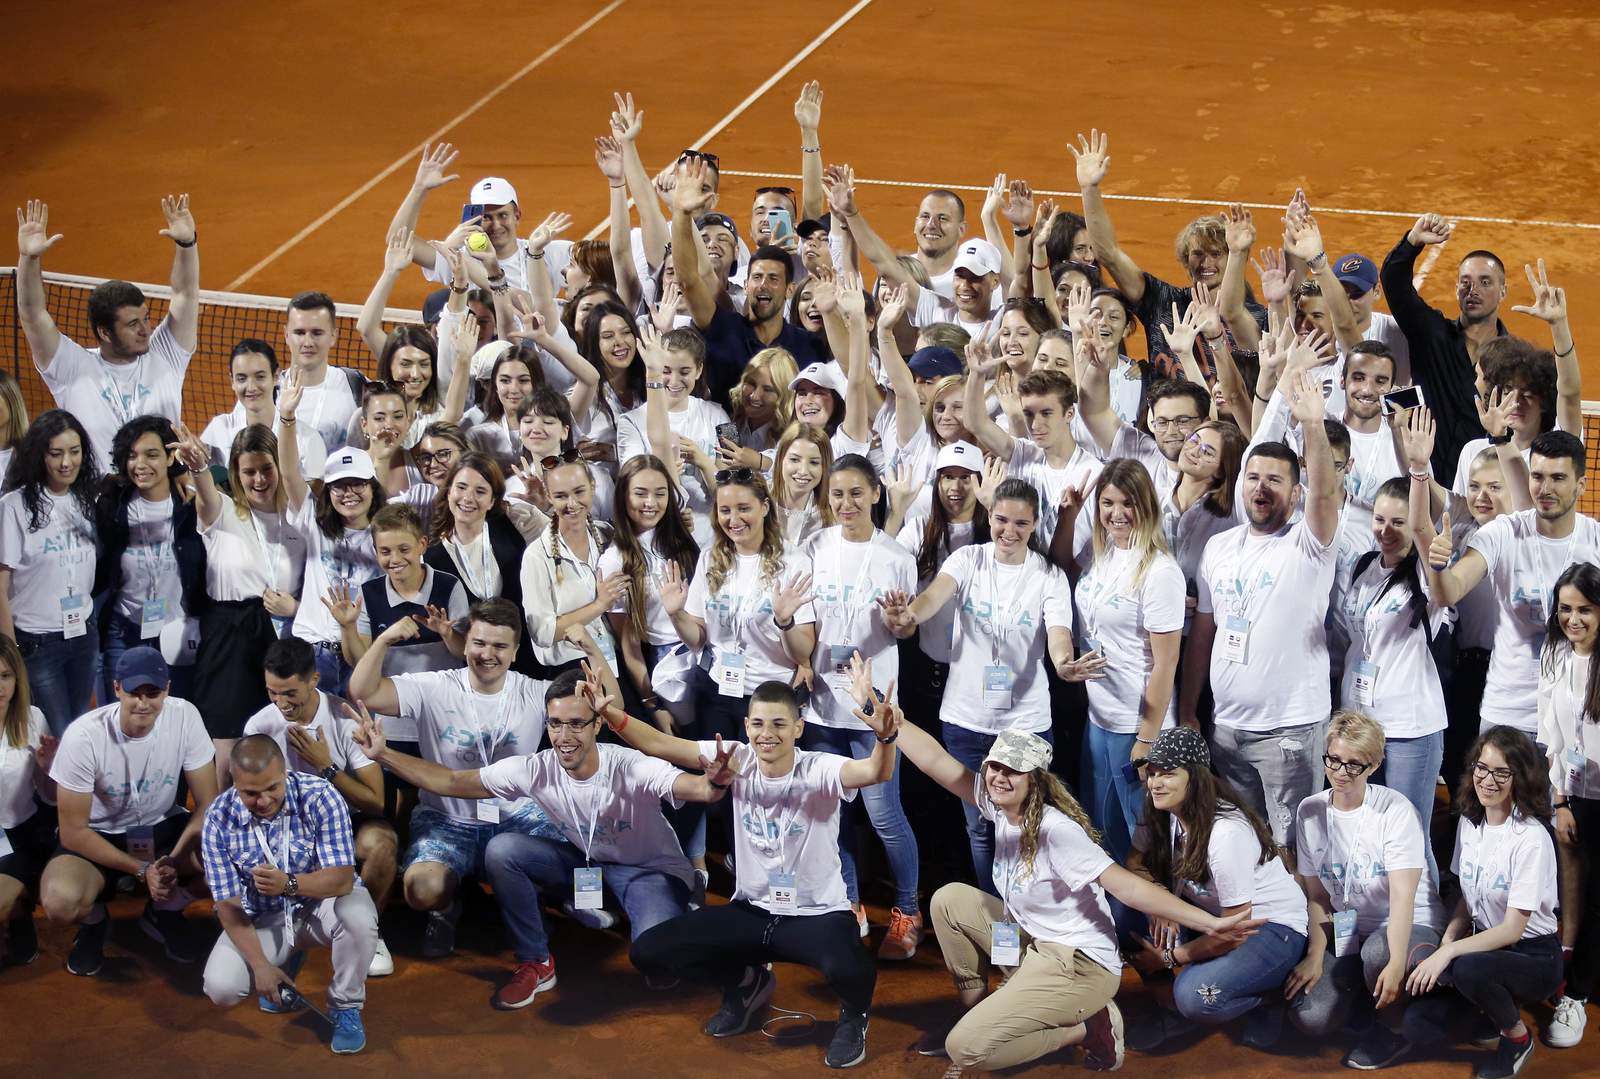 Virus cases at Djokovic's event put sports under scrutiny